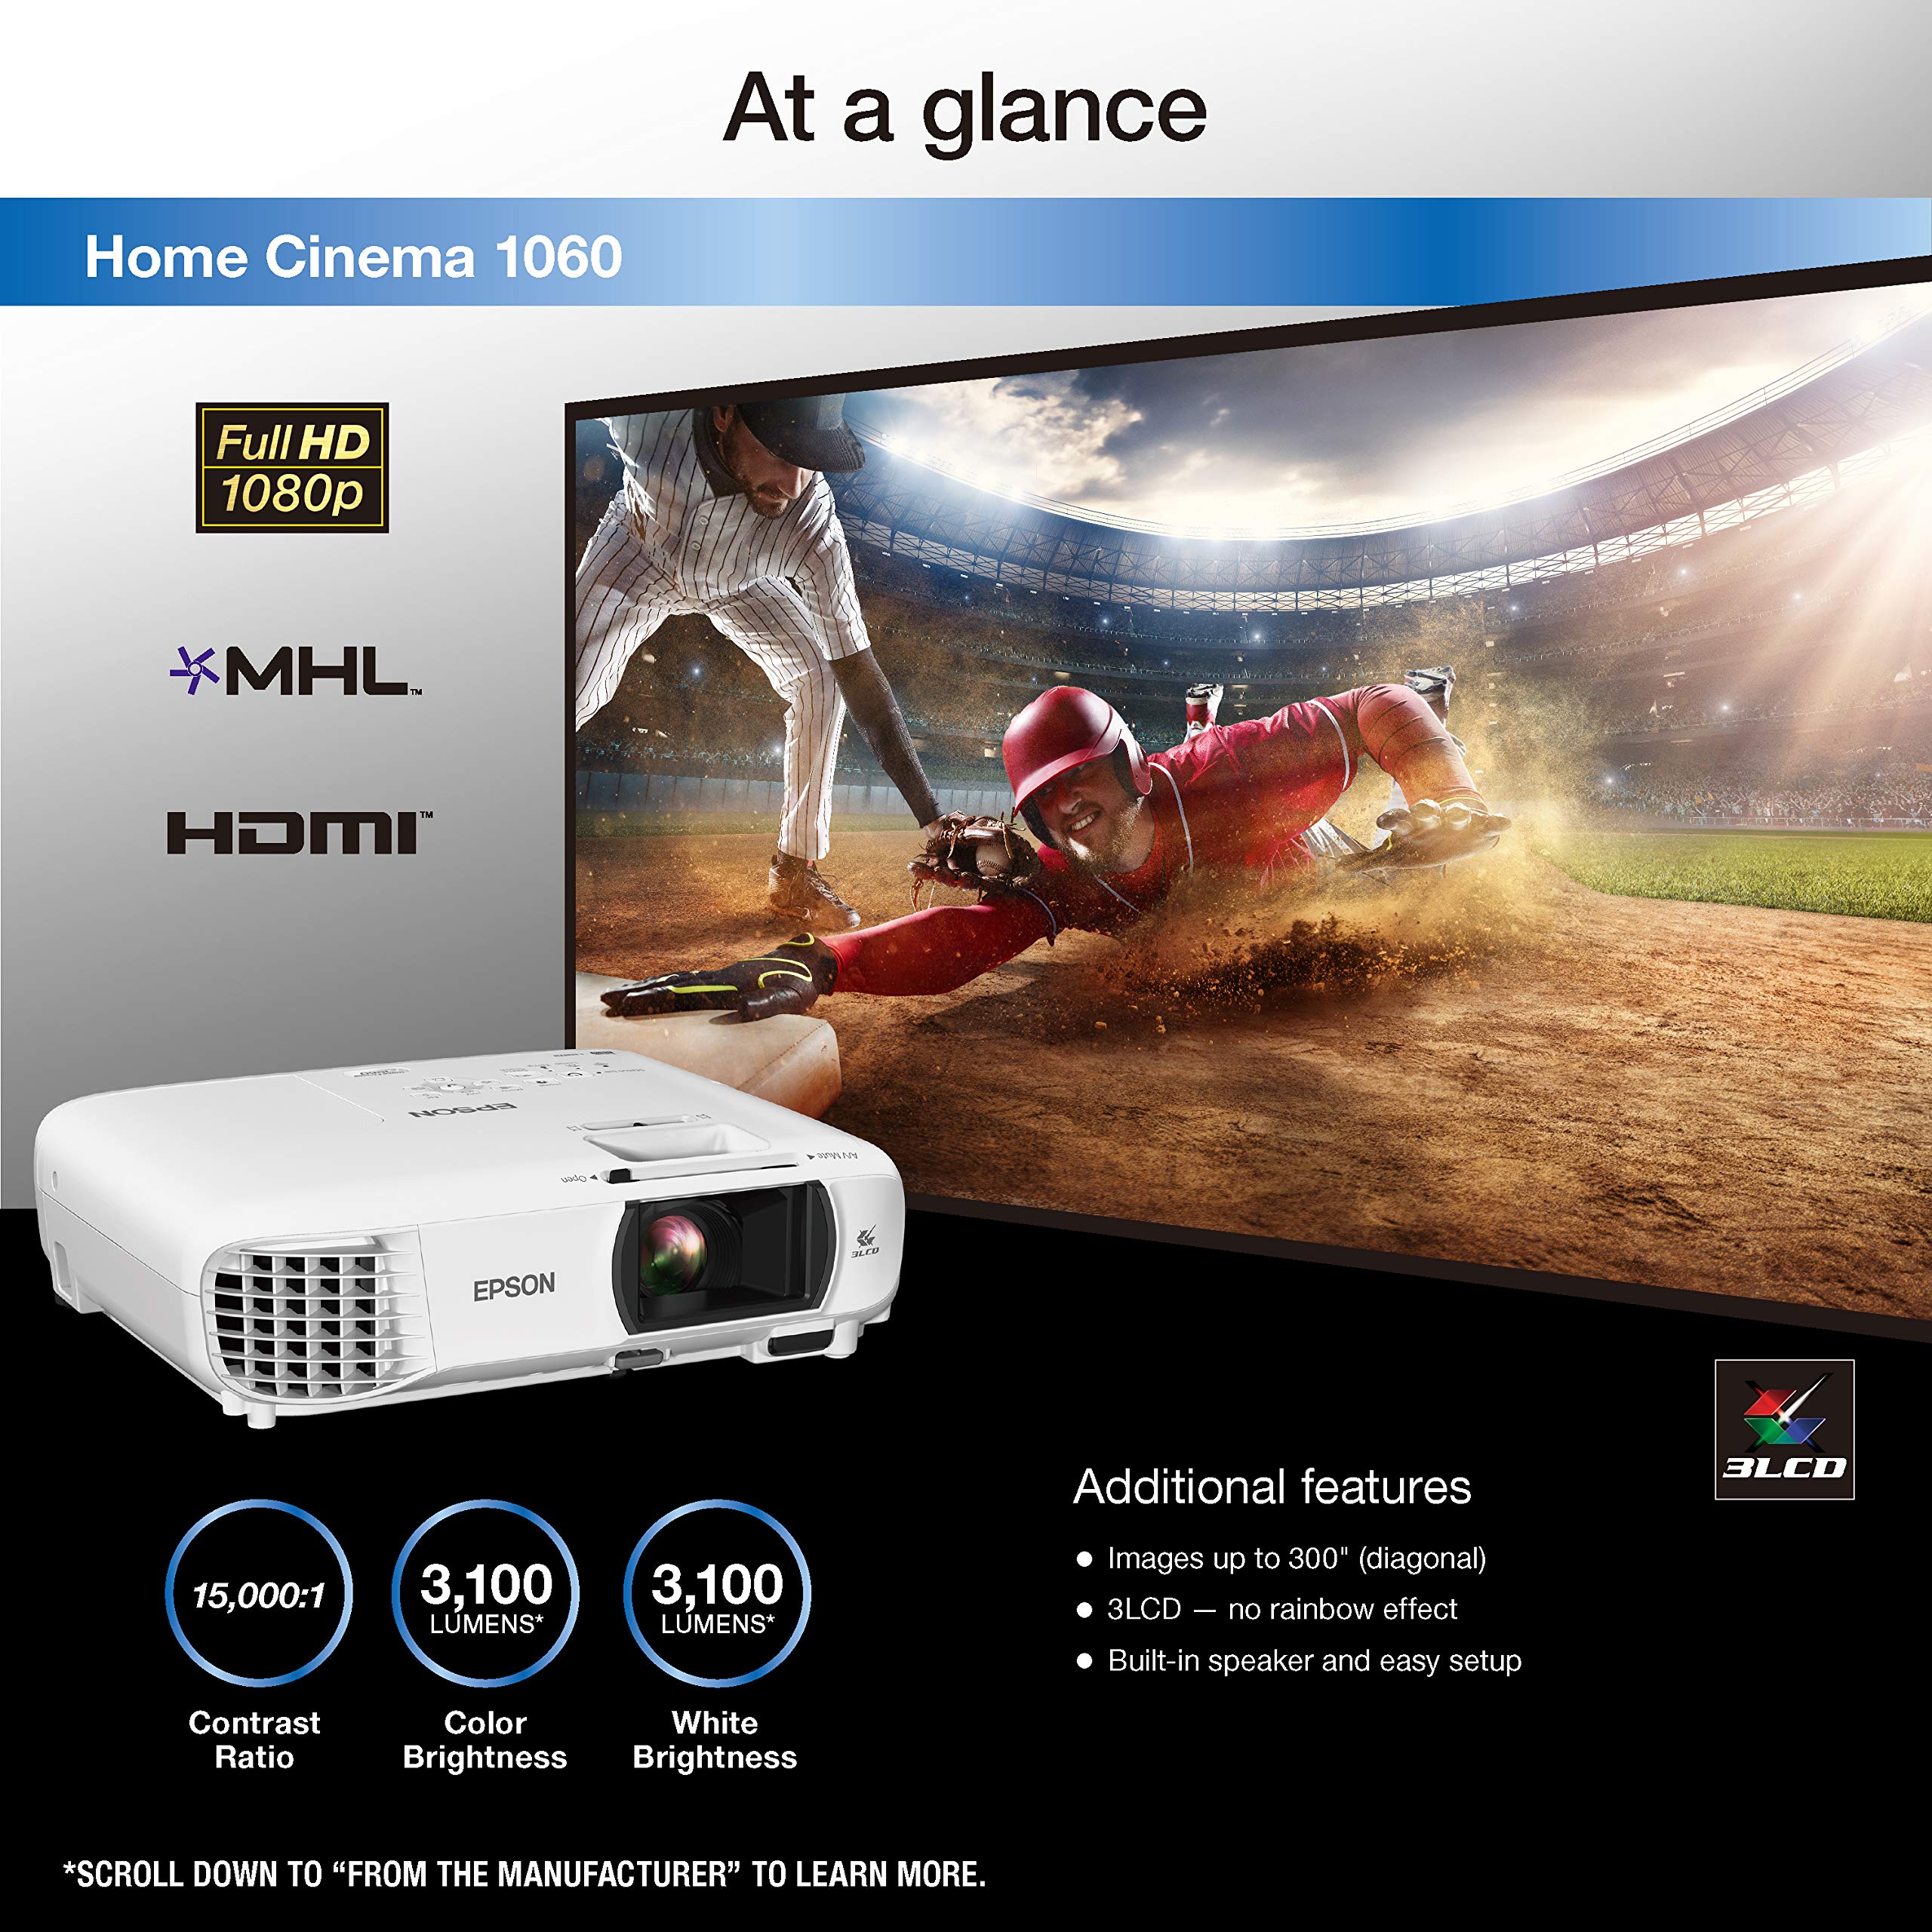 Epson Home Cinema 1060 Full HD 1080p 3,100 Lumens Color Brightness